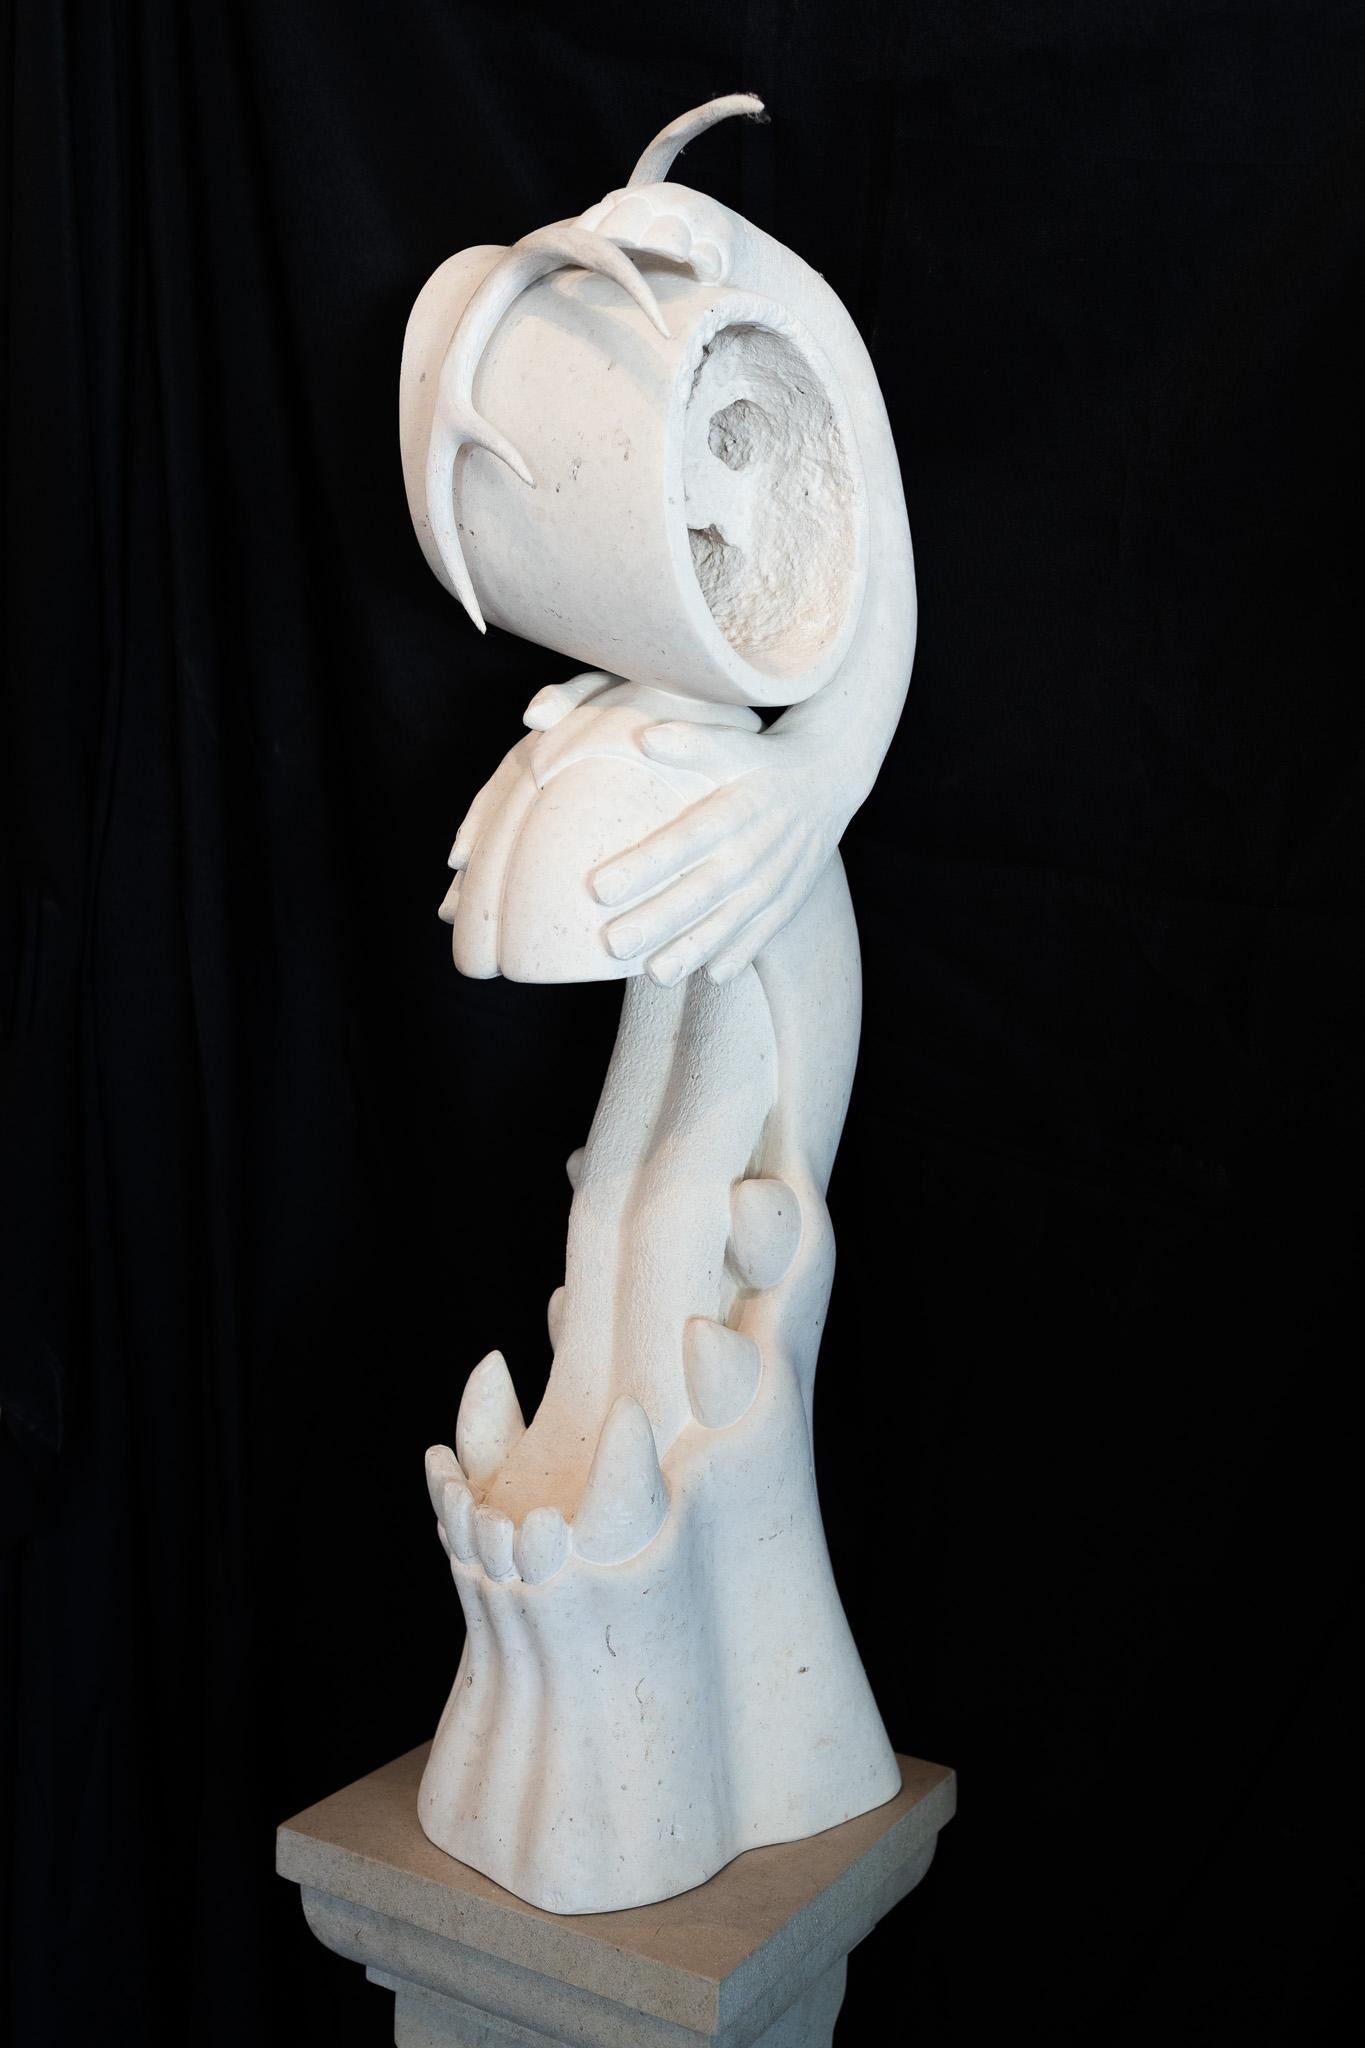 Bob Ragan Figurative Sculpture - "Boogie Woogie Got a Horse Bit" Fantastical Psychedelic Sculpture White Stone